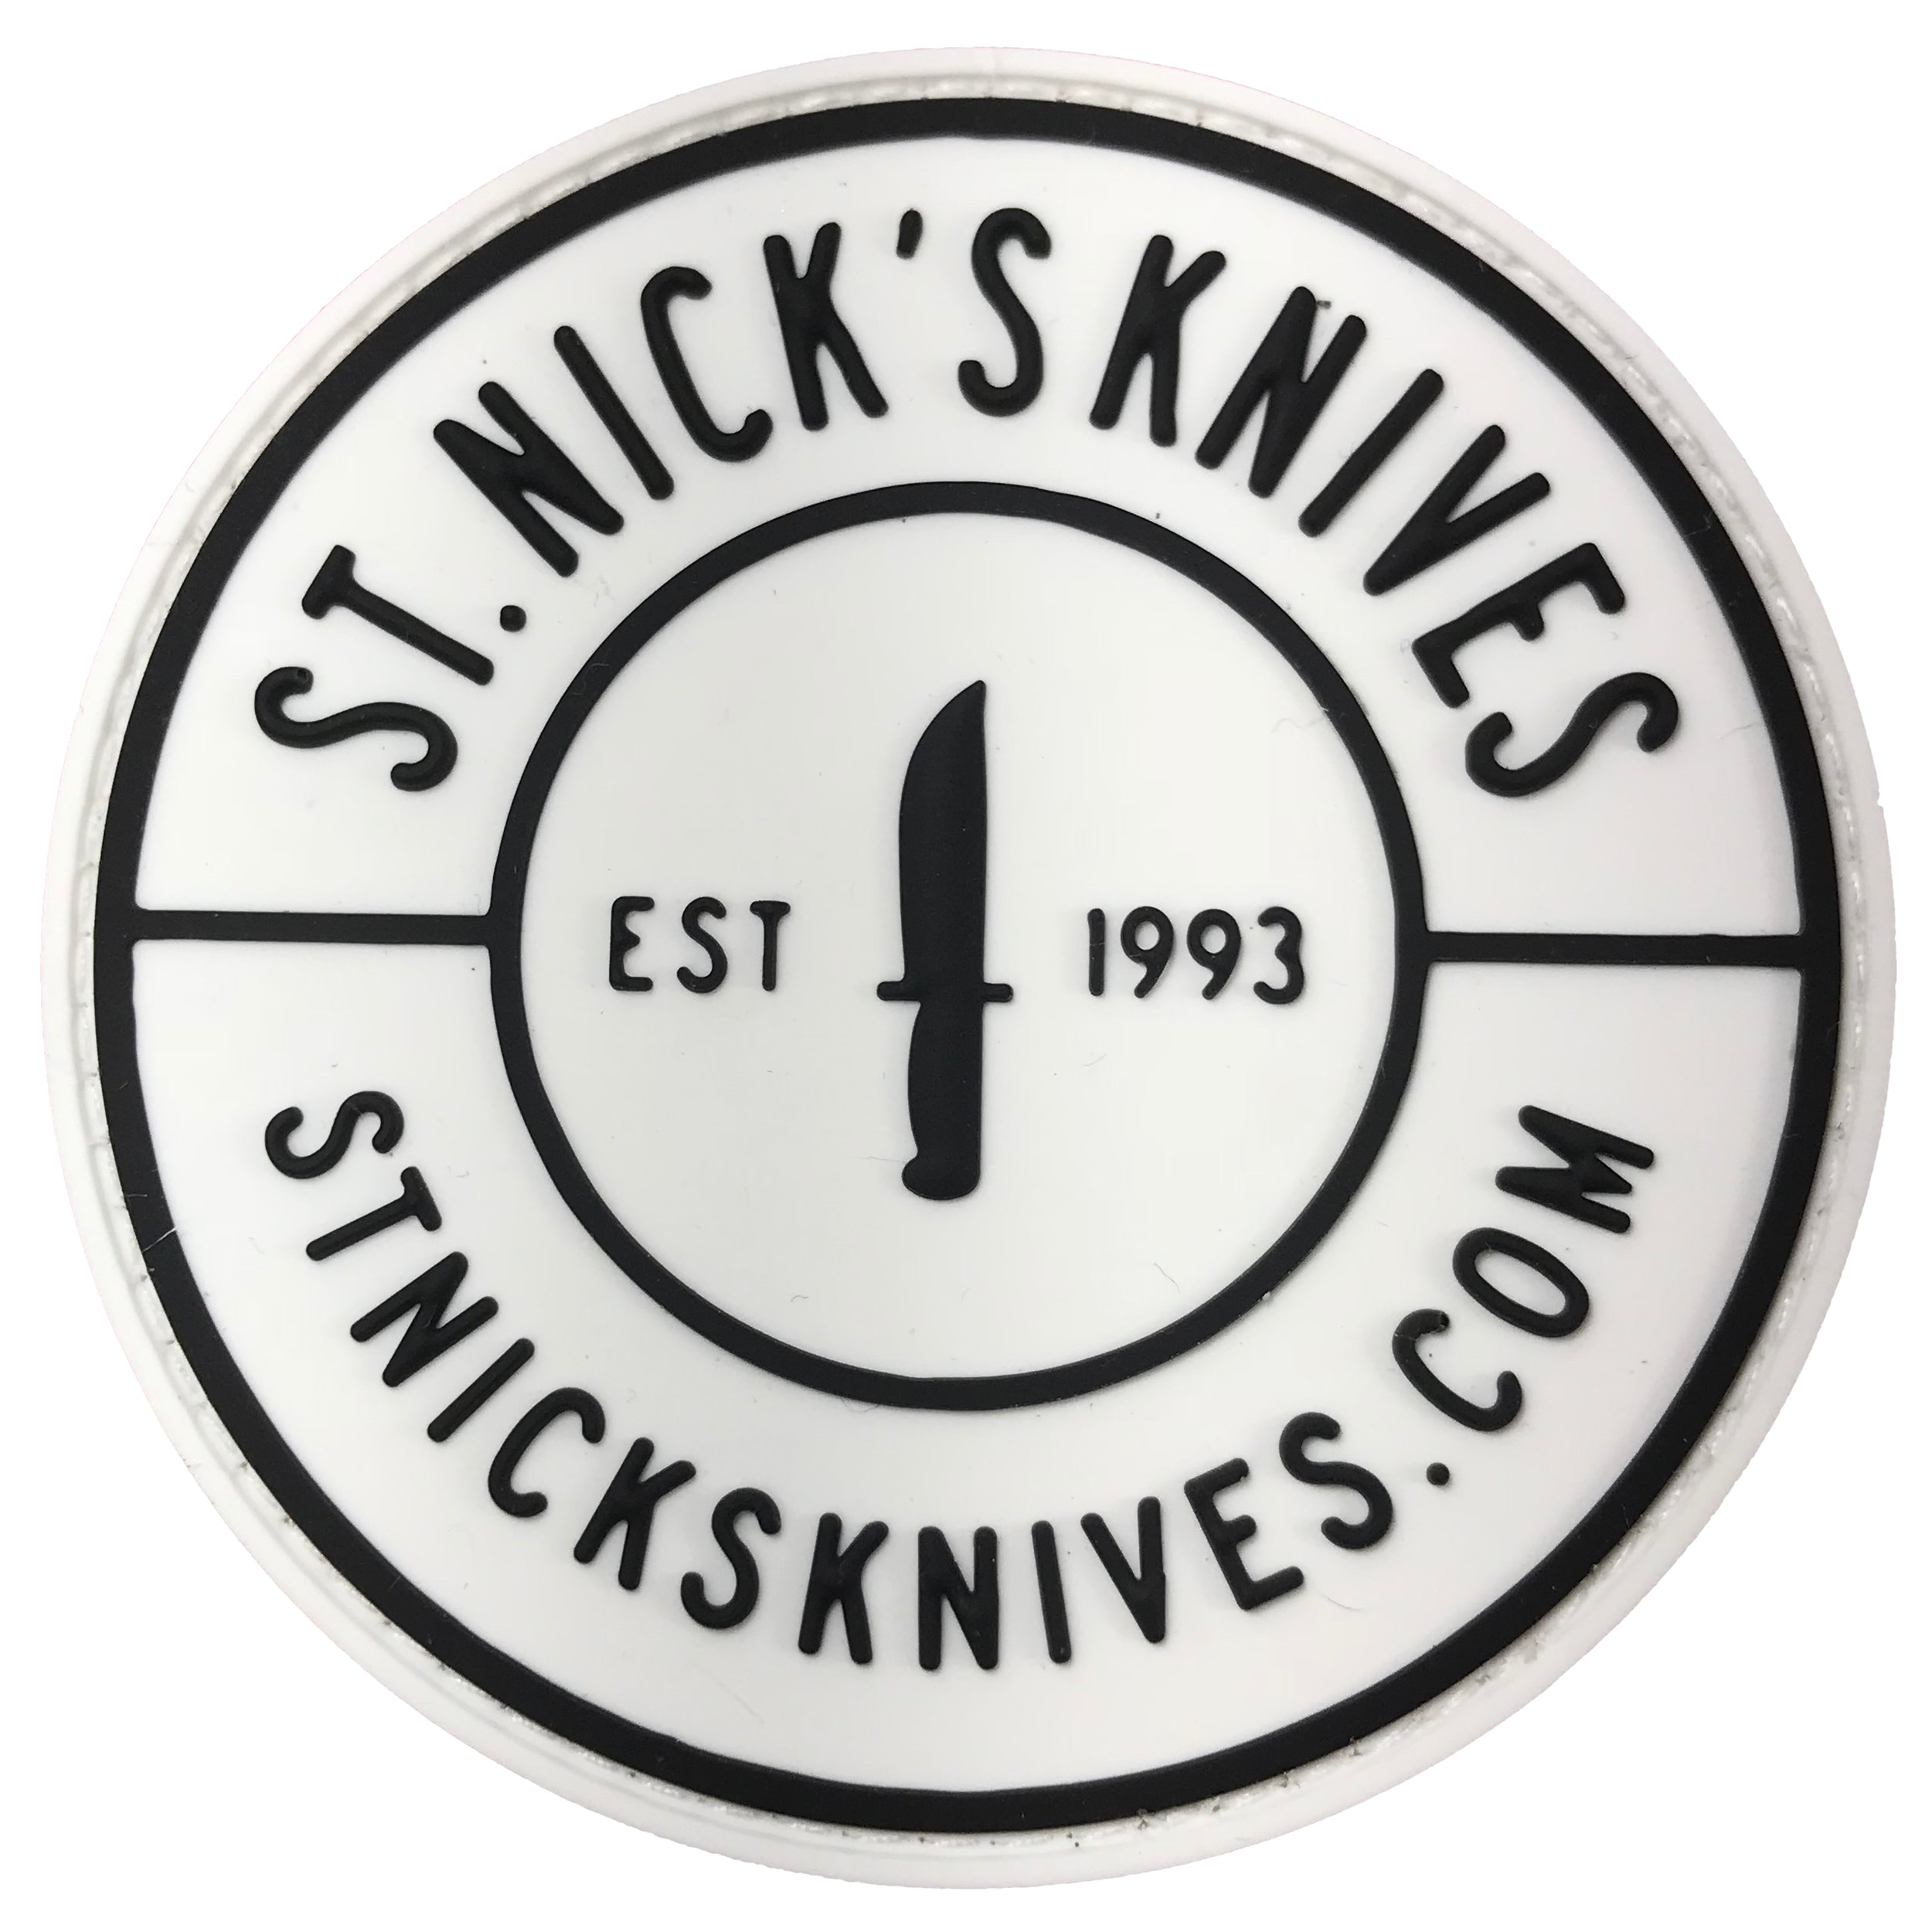 St. Nicks Knives - PVC Patch - Store Seal - White